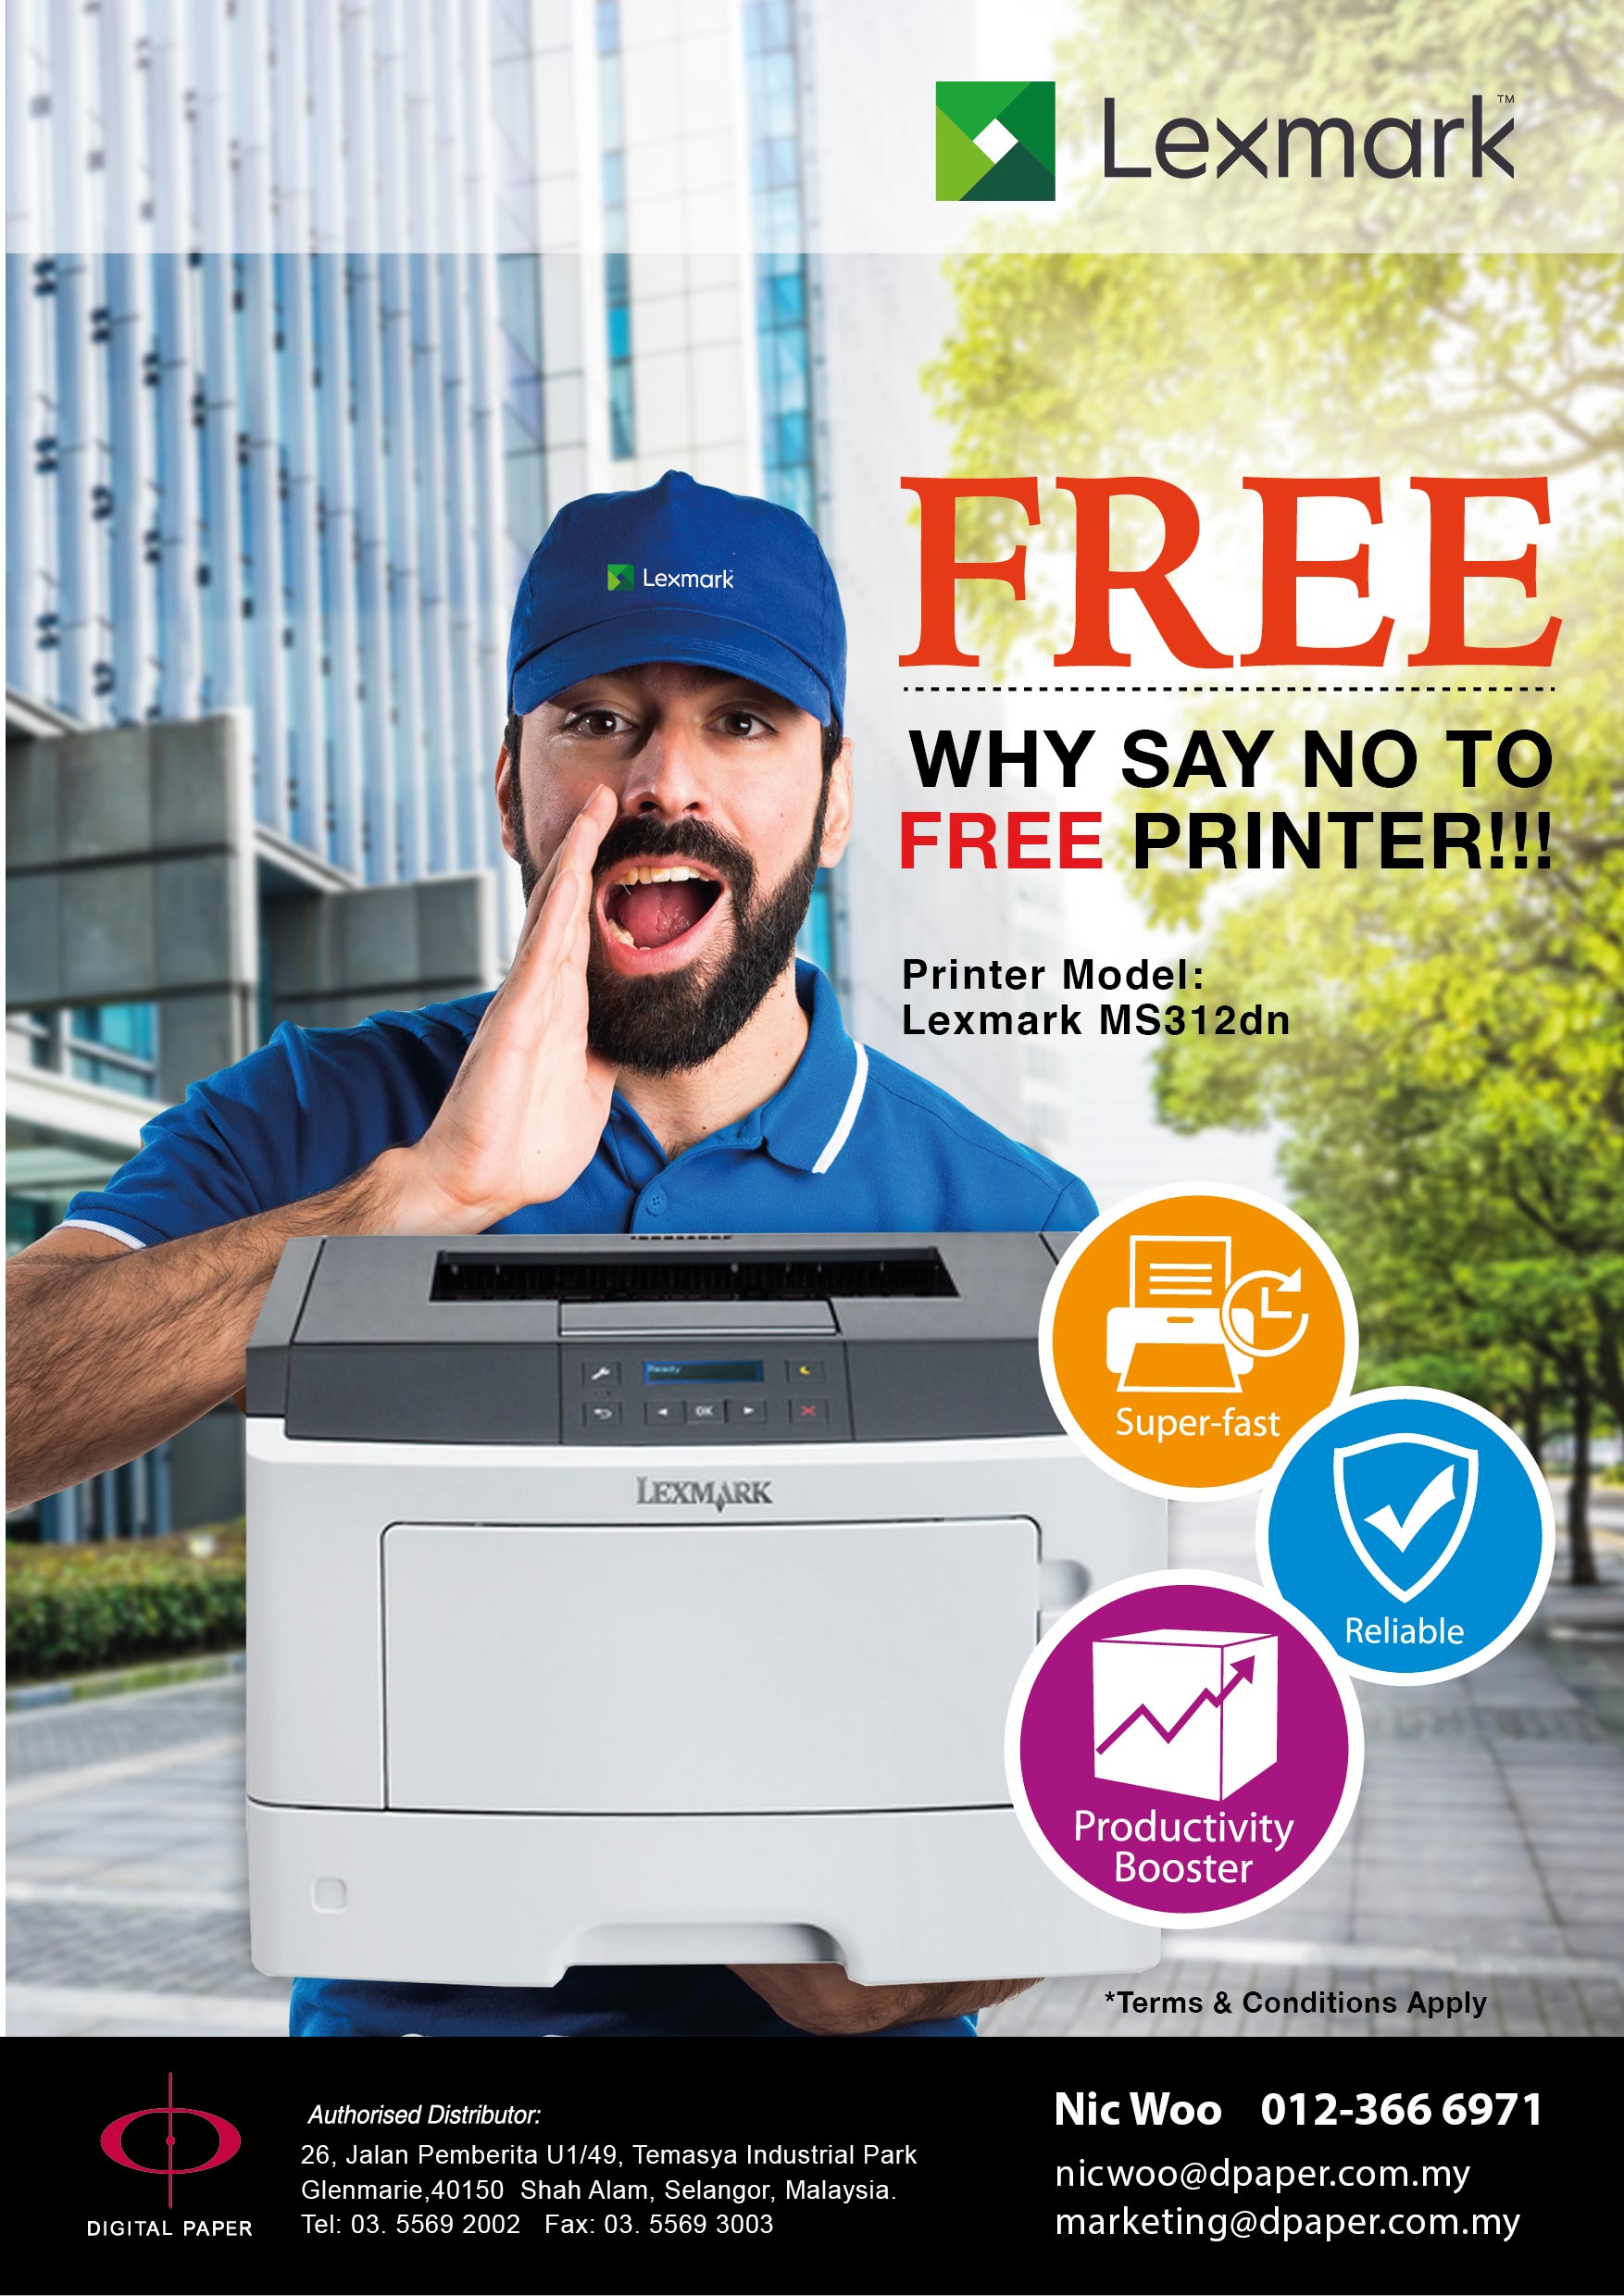 Lexmark FREE printer